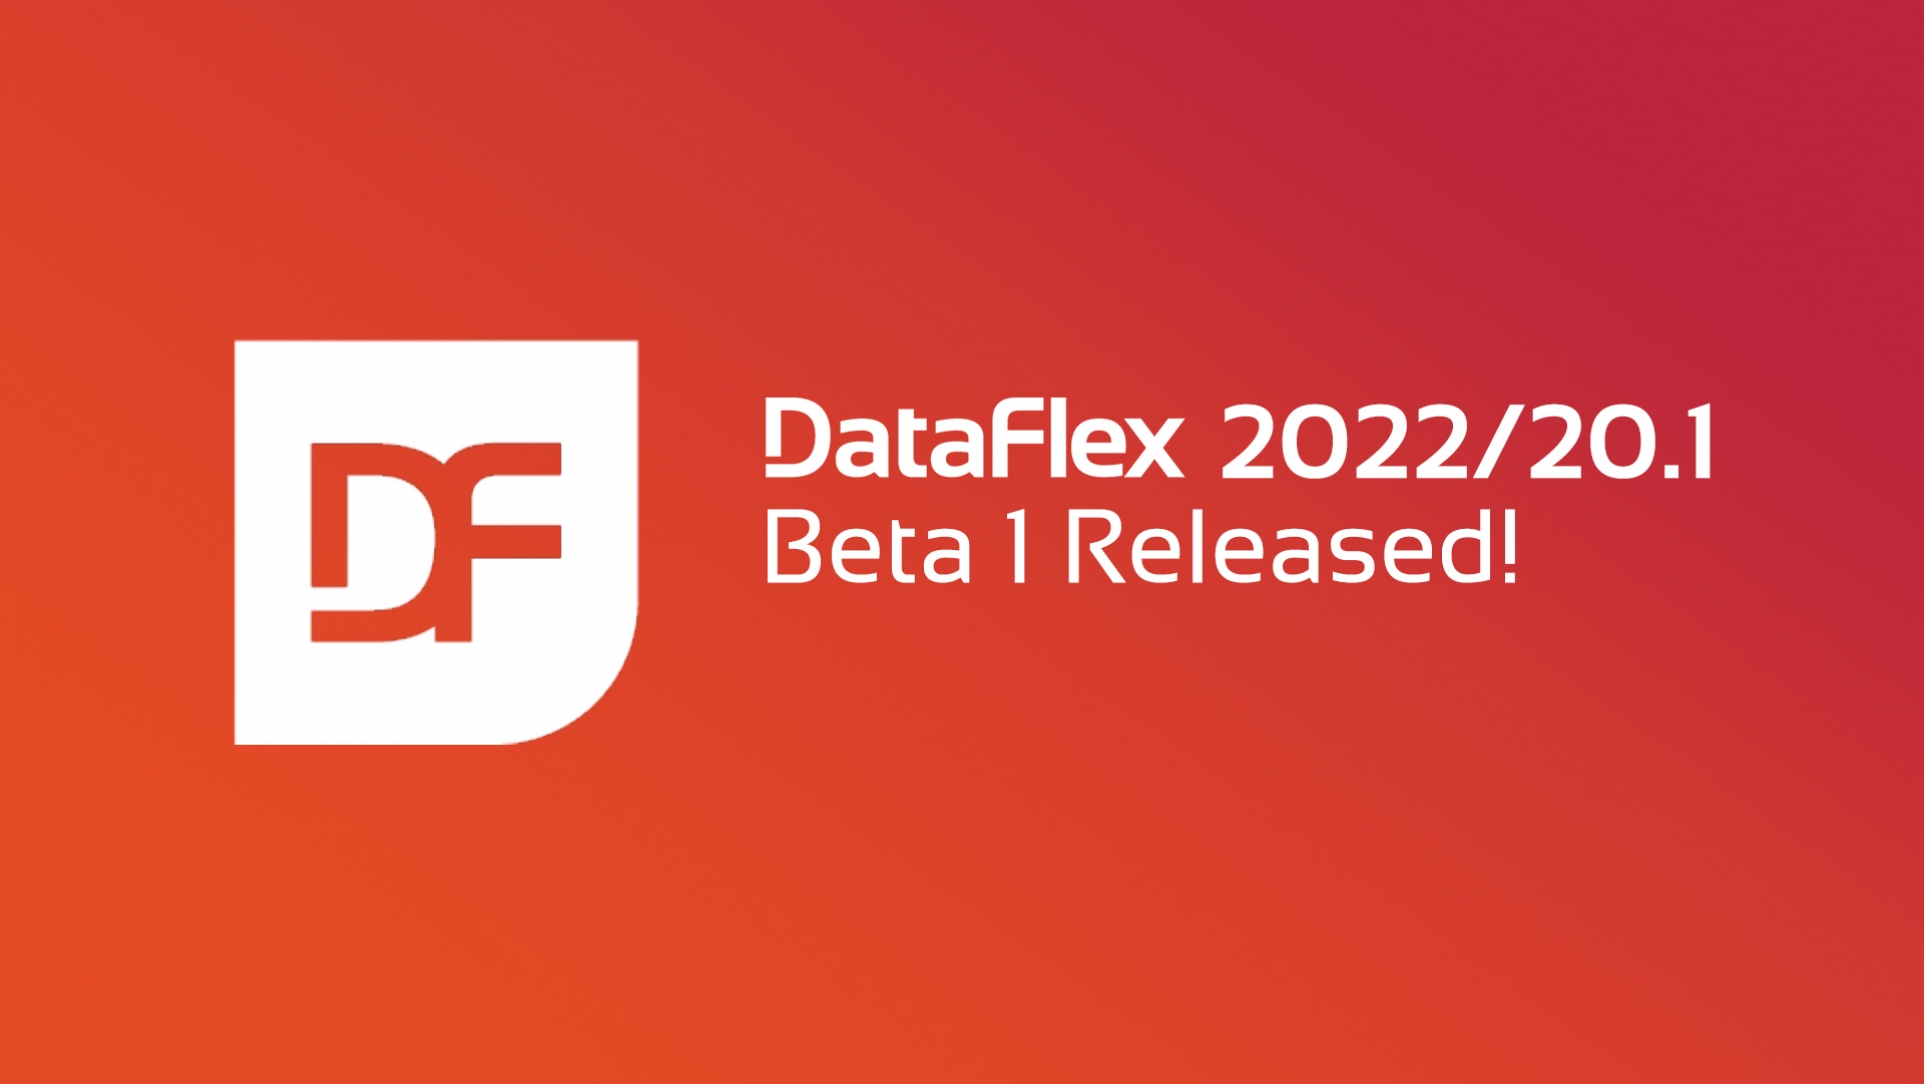 DataFlex 2022 Beta 1 released